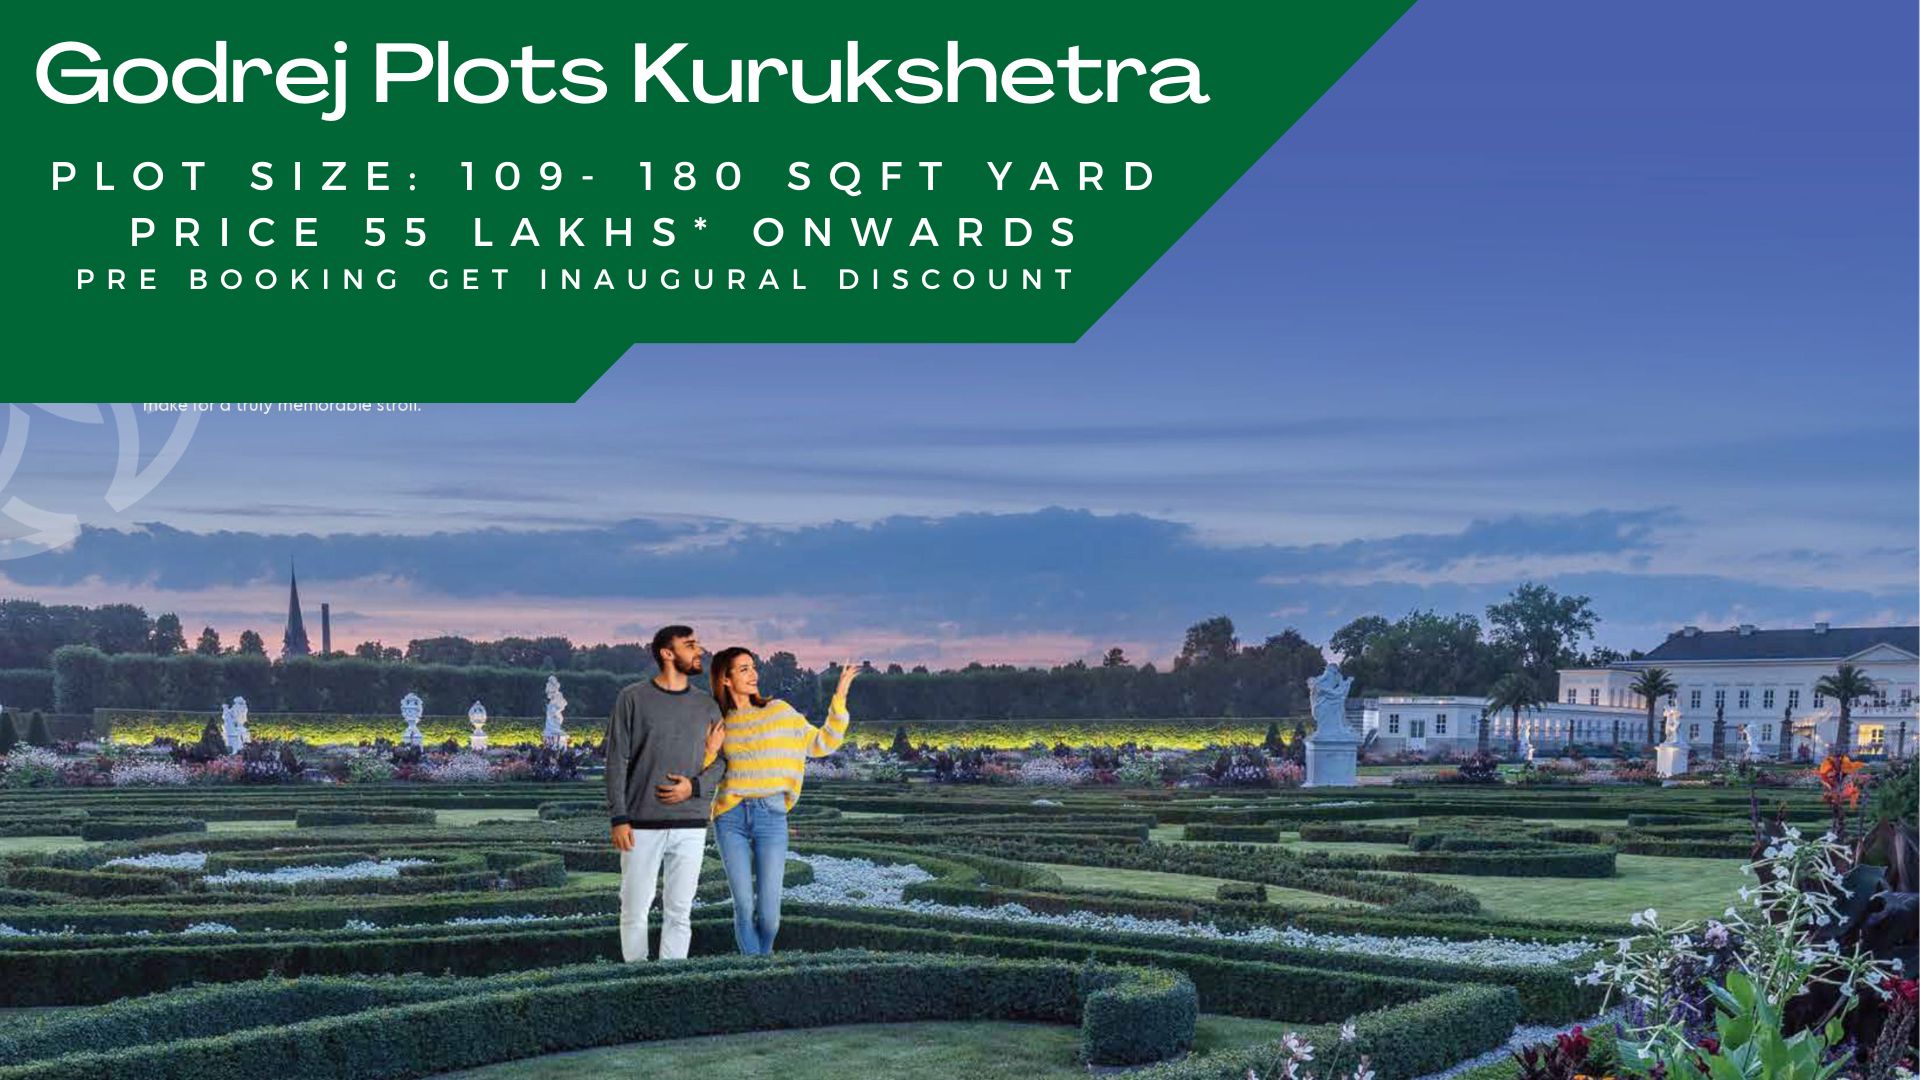 Godrej Plots Kurukshetra- A Dream Investment Project for Investors!